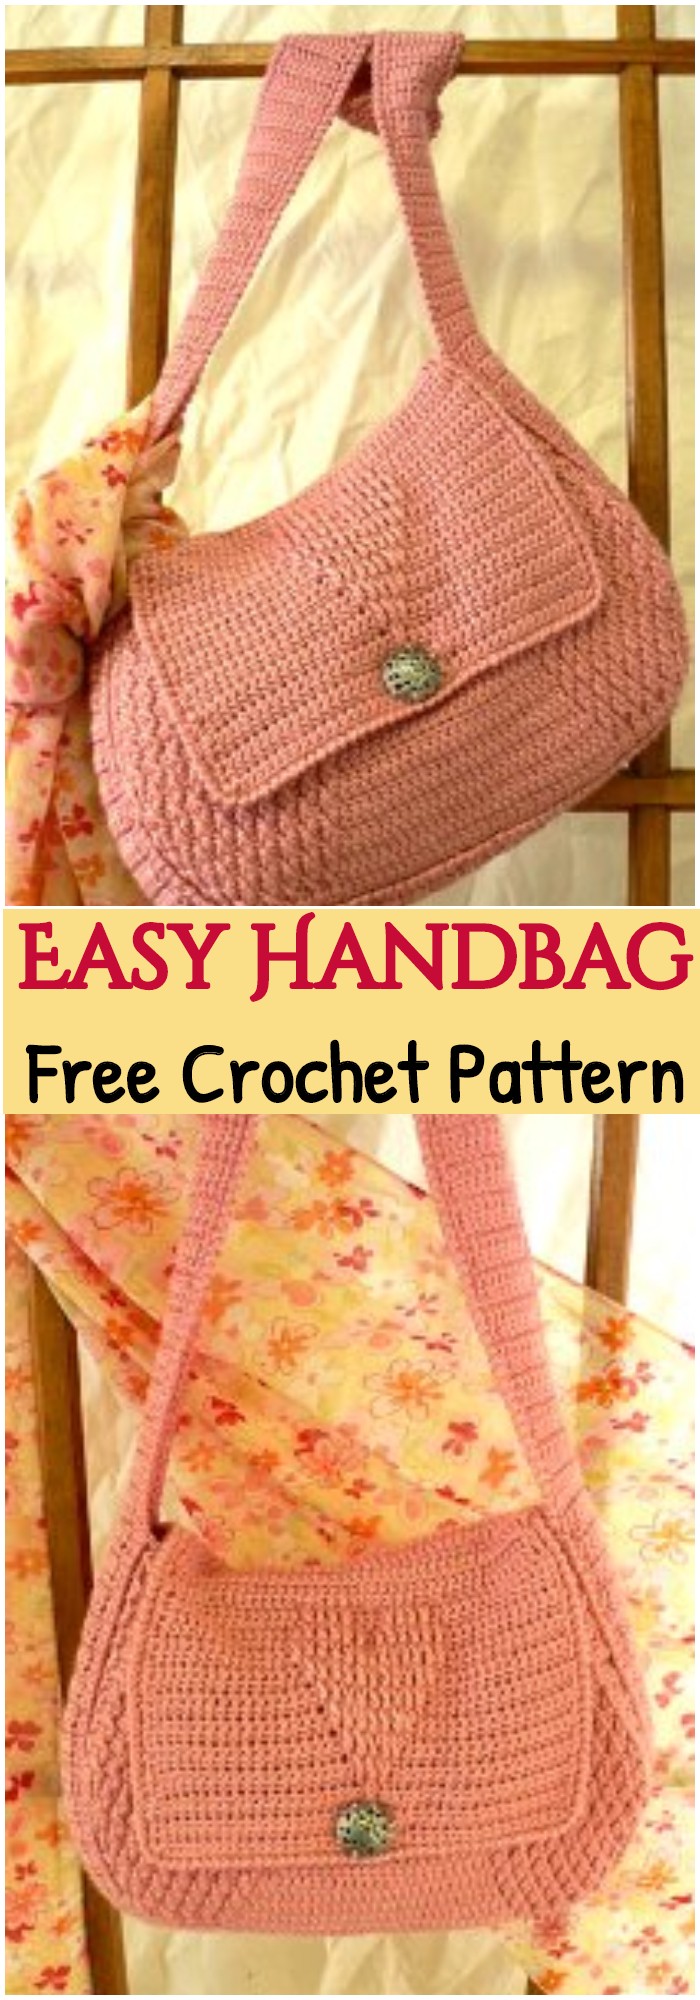 Crochet Pattern For Easy Handbag